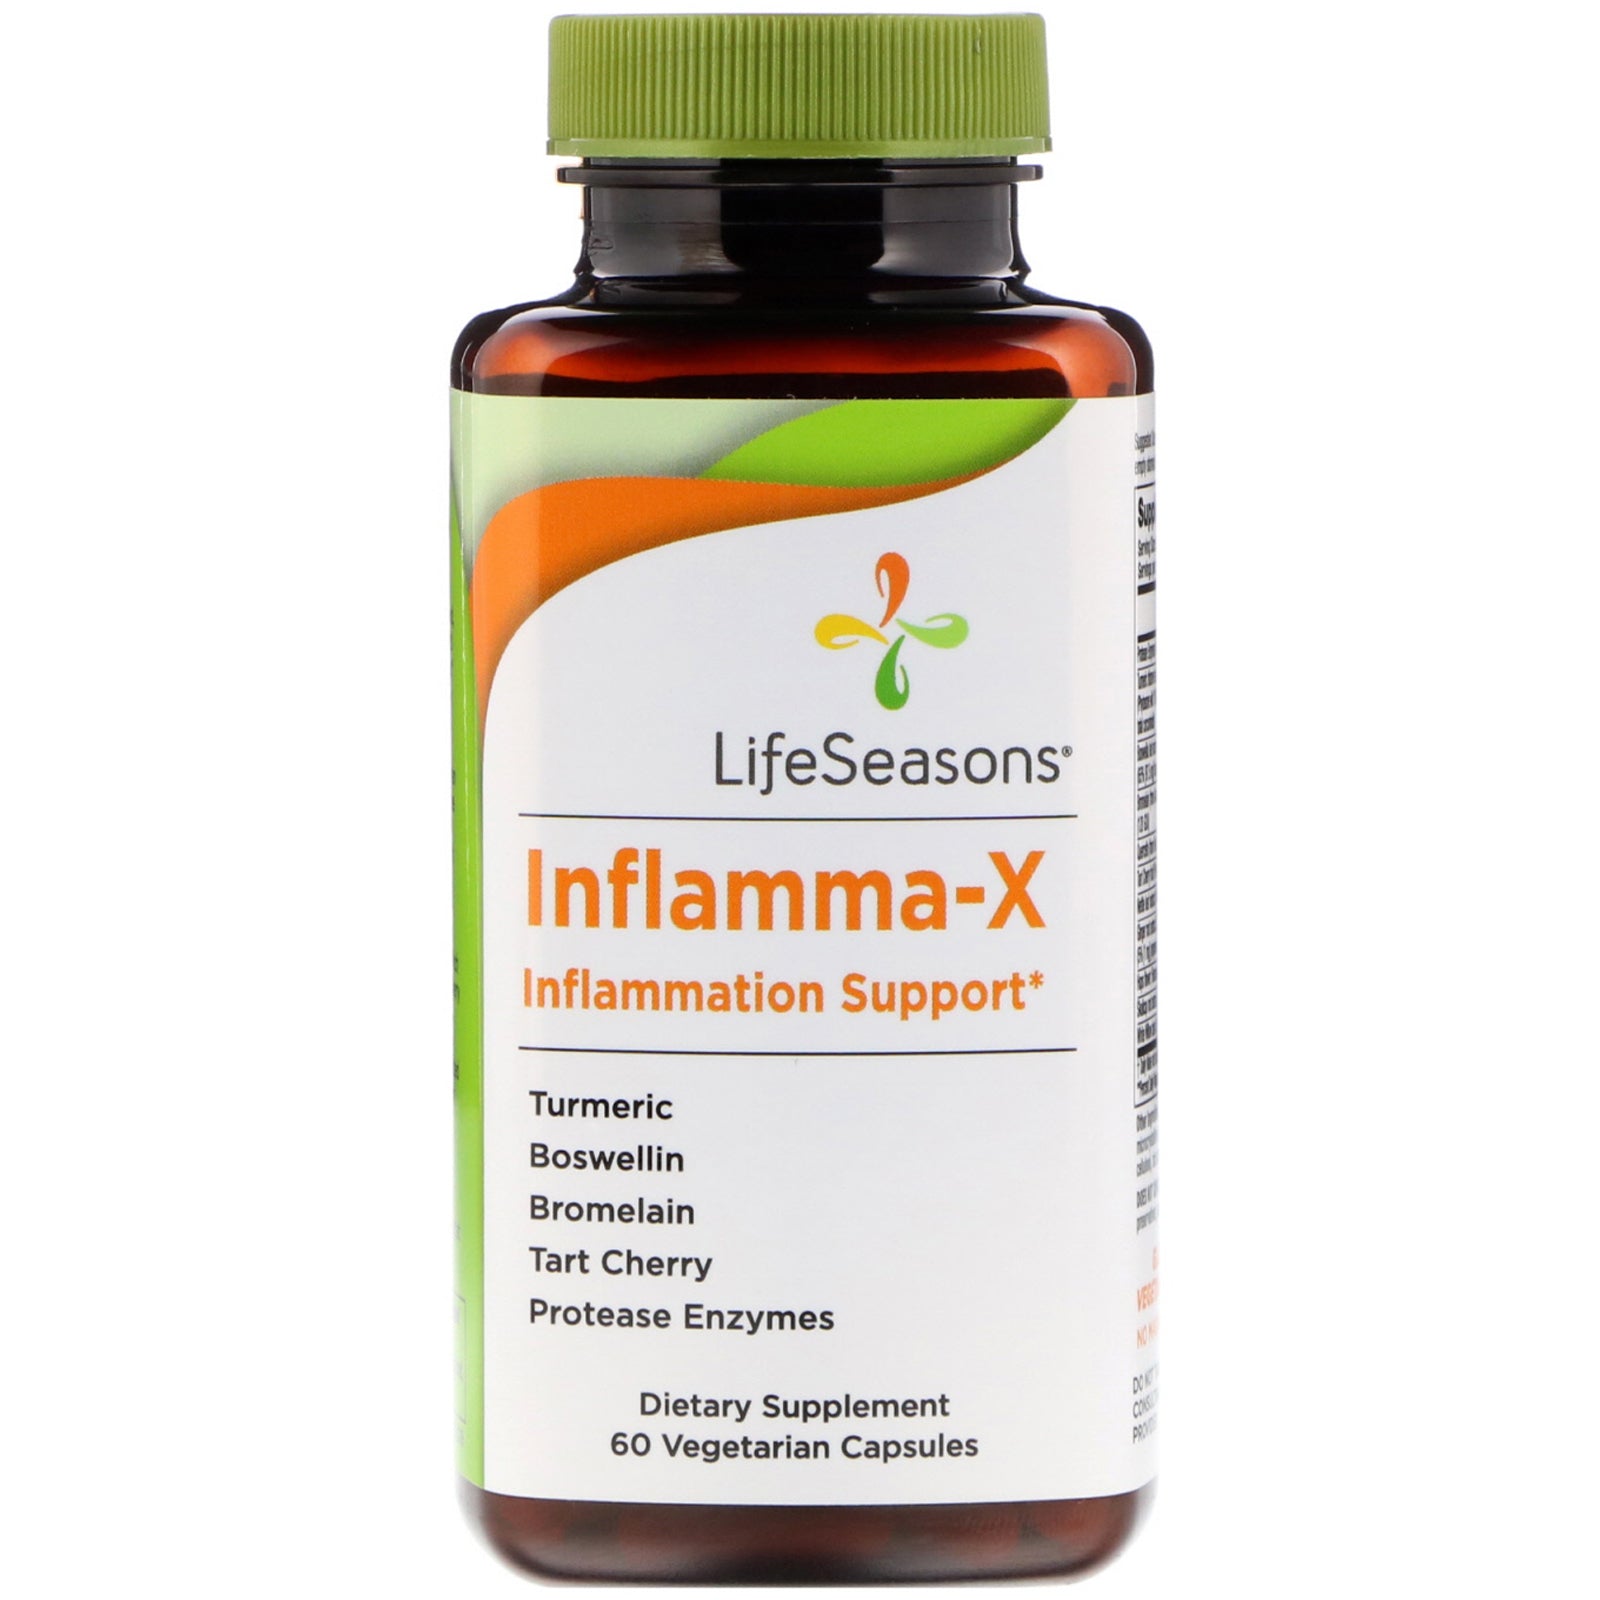 LifeSeasons, Inflamma-X, Inflammation Support, 60 Vegetarian Capsules